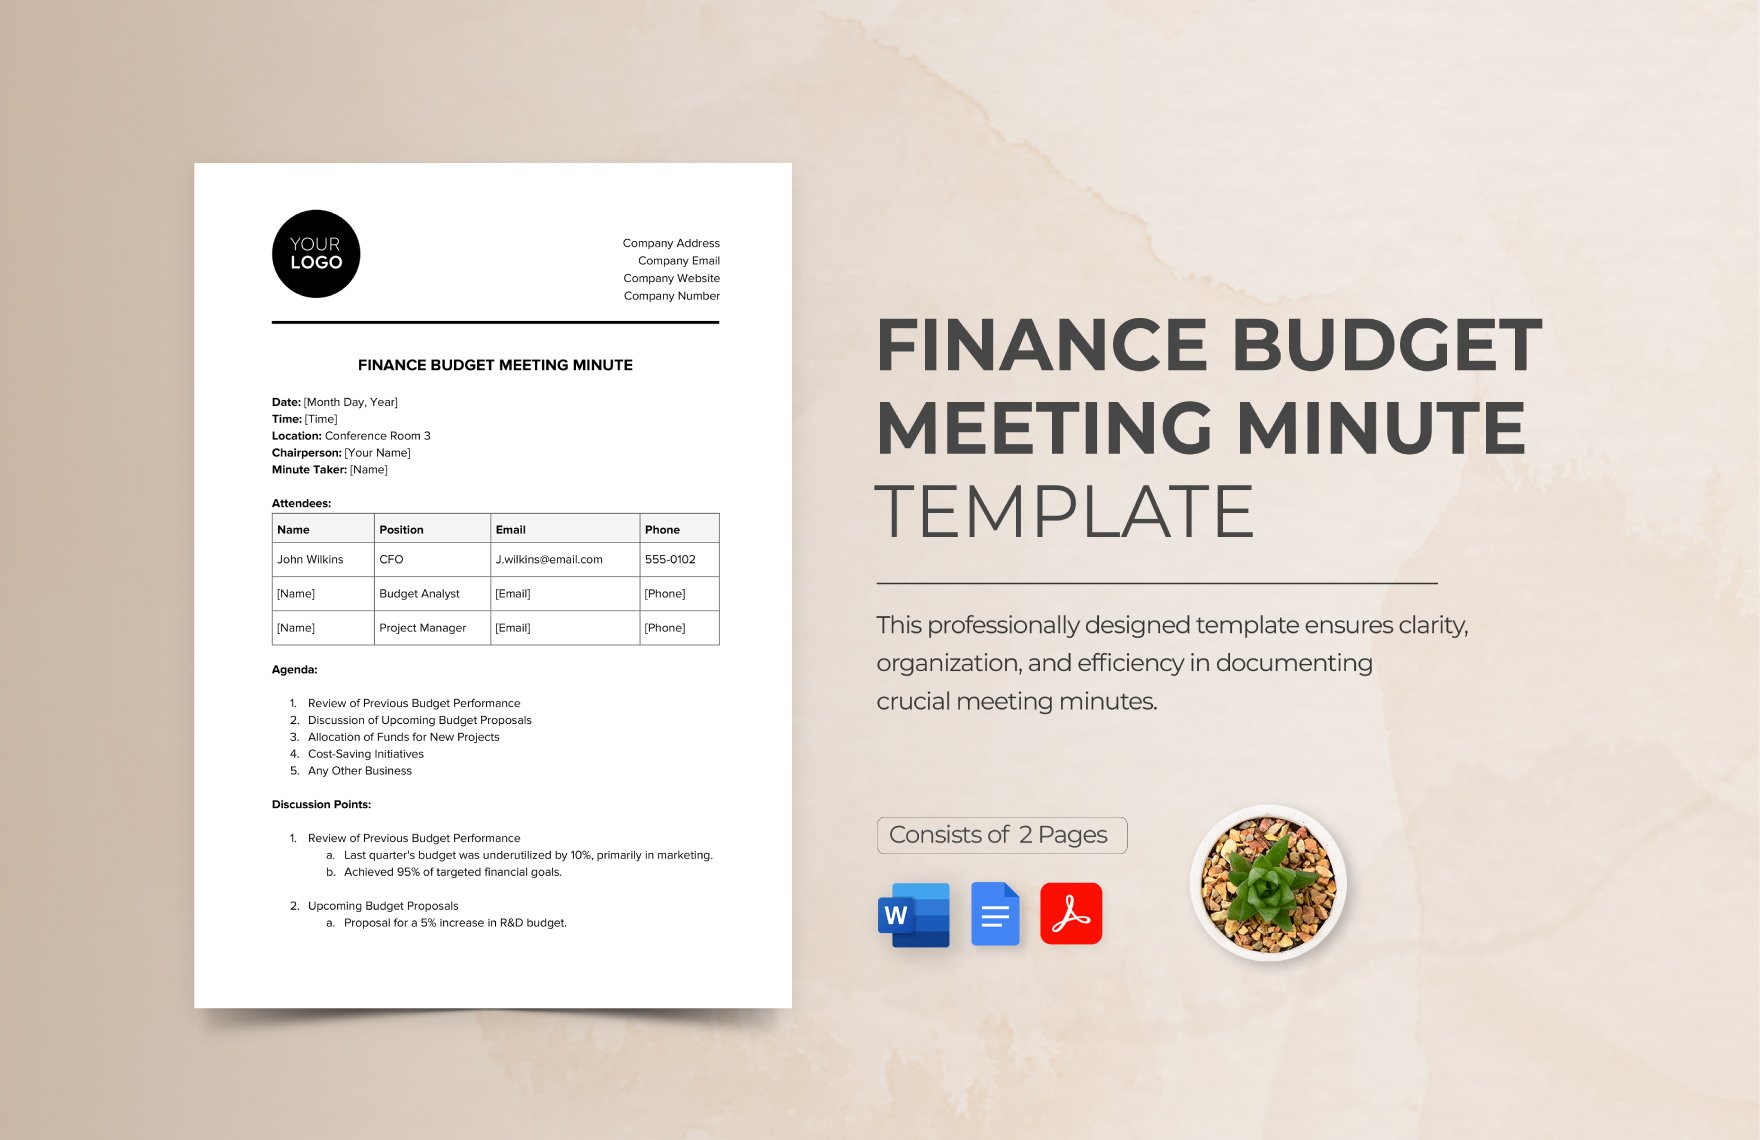 Finance Budget Meeting Minute Template